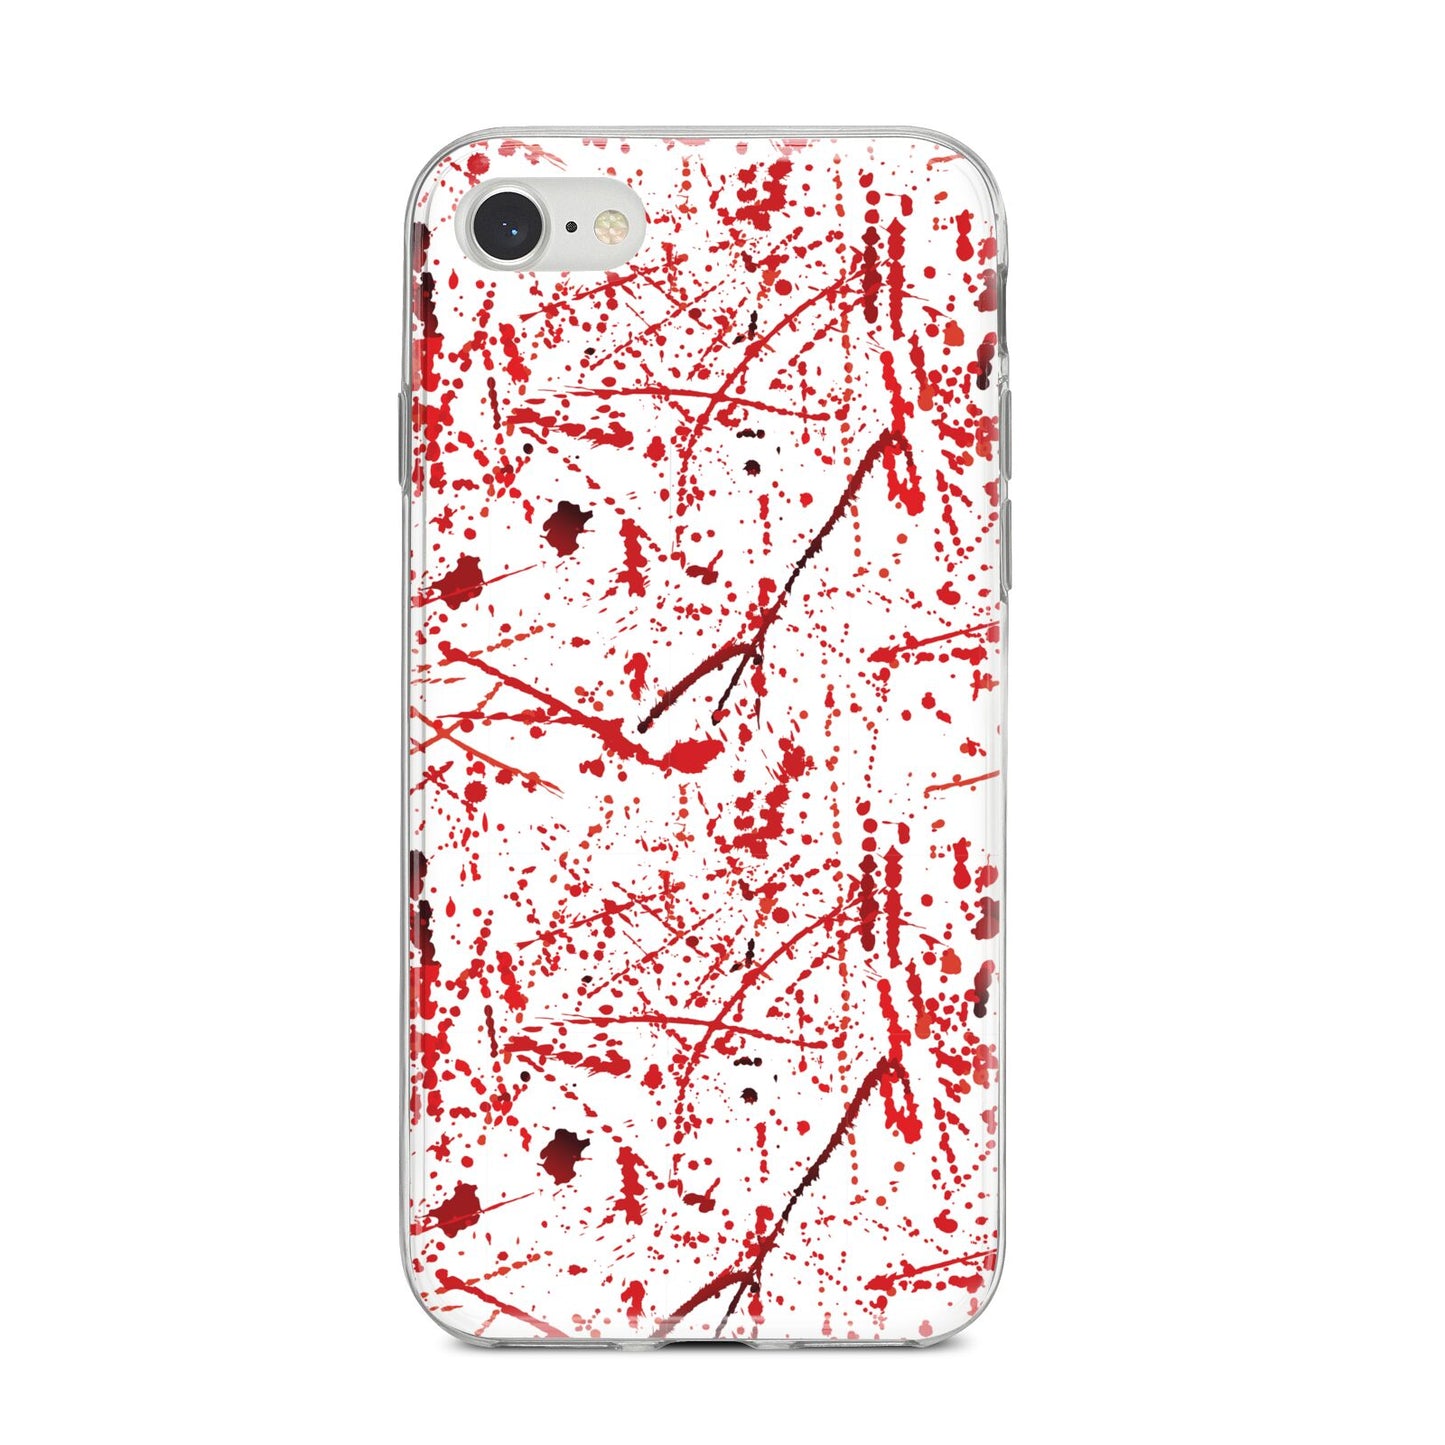 Blood Splatter iPhone 8 Bumper Case on Silver iPhone